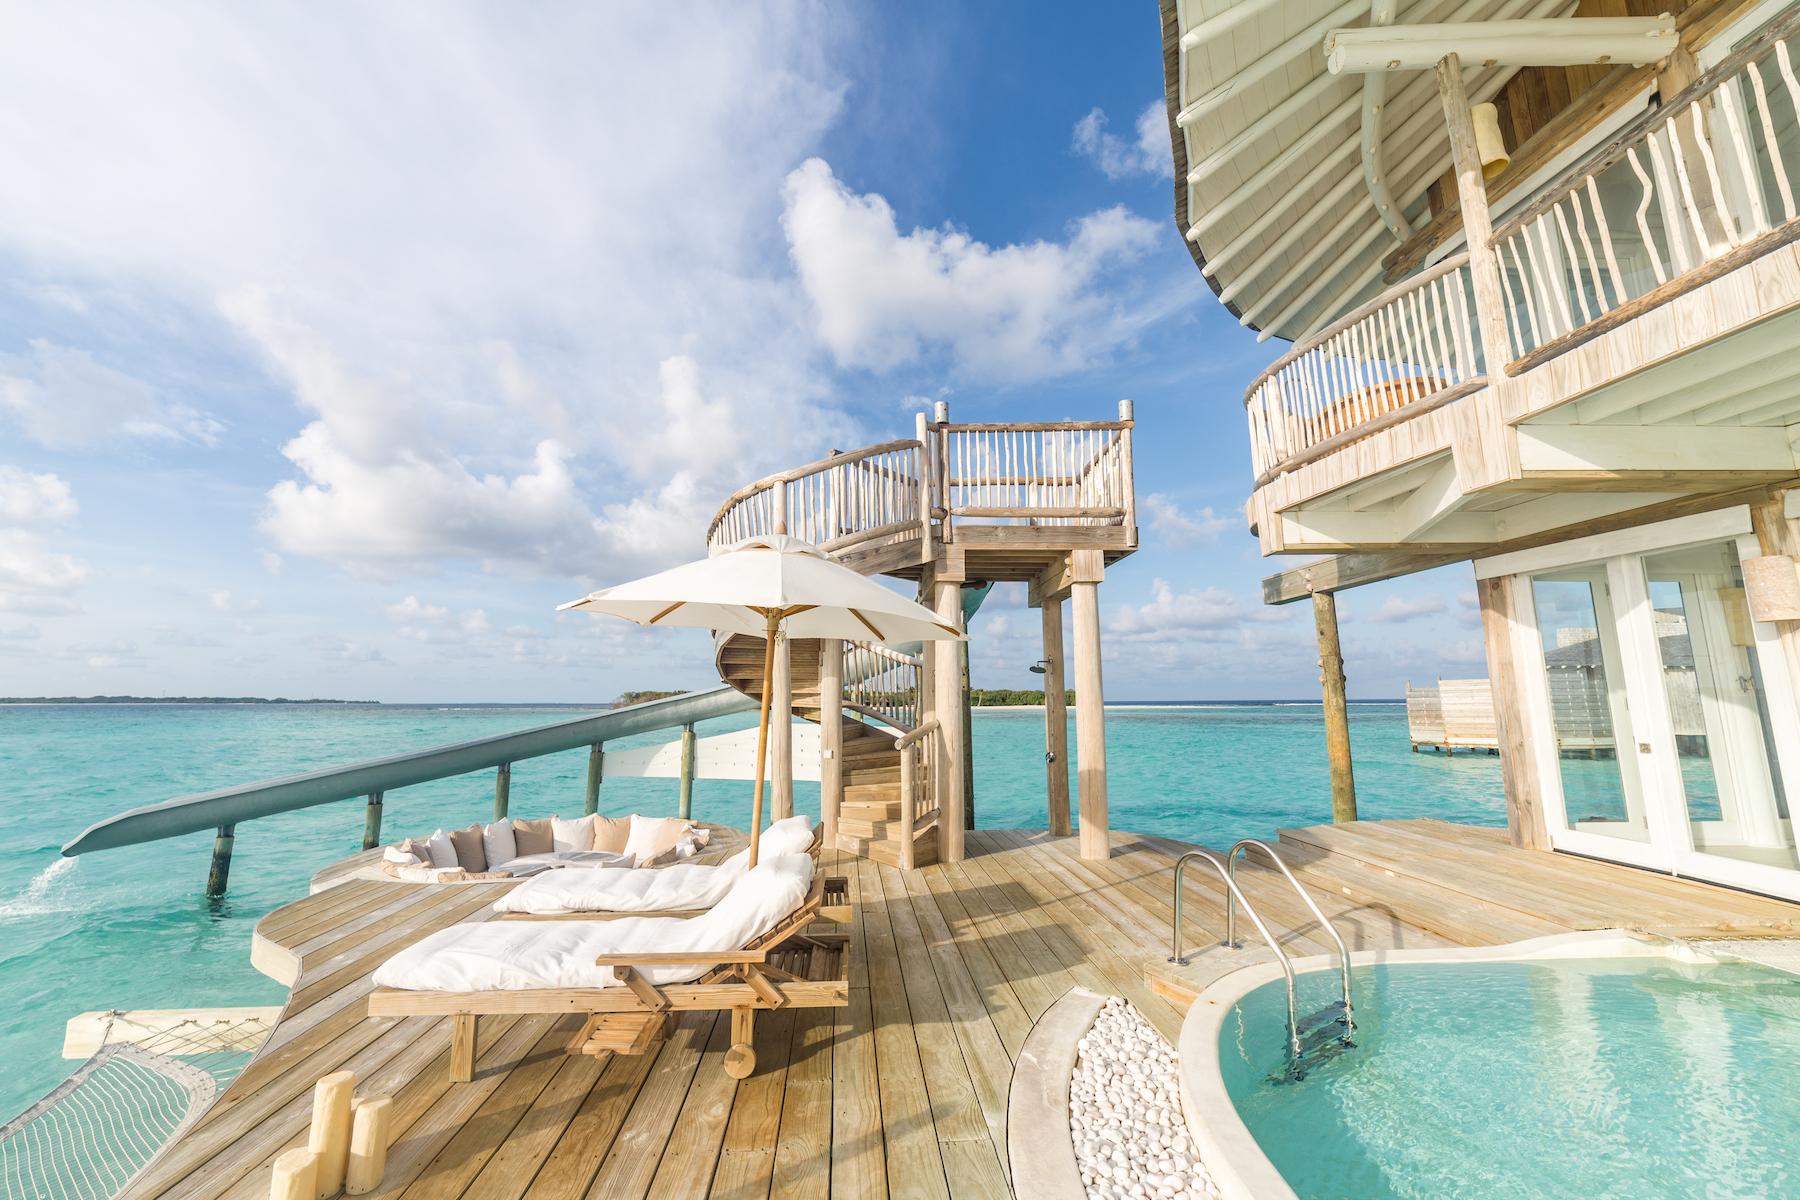 HJ Real Estate Guide: The Spectacular Villa 3 at Maldives' Soneva Jani